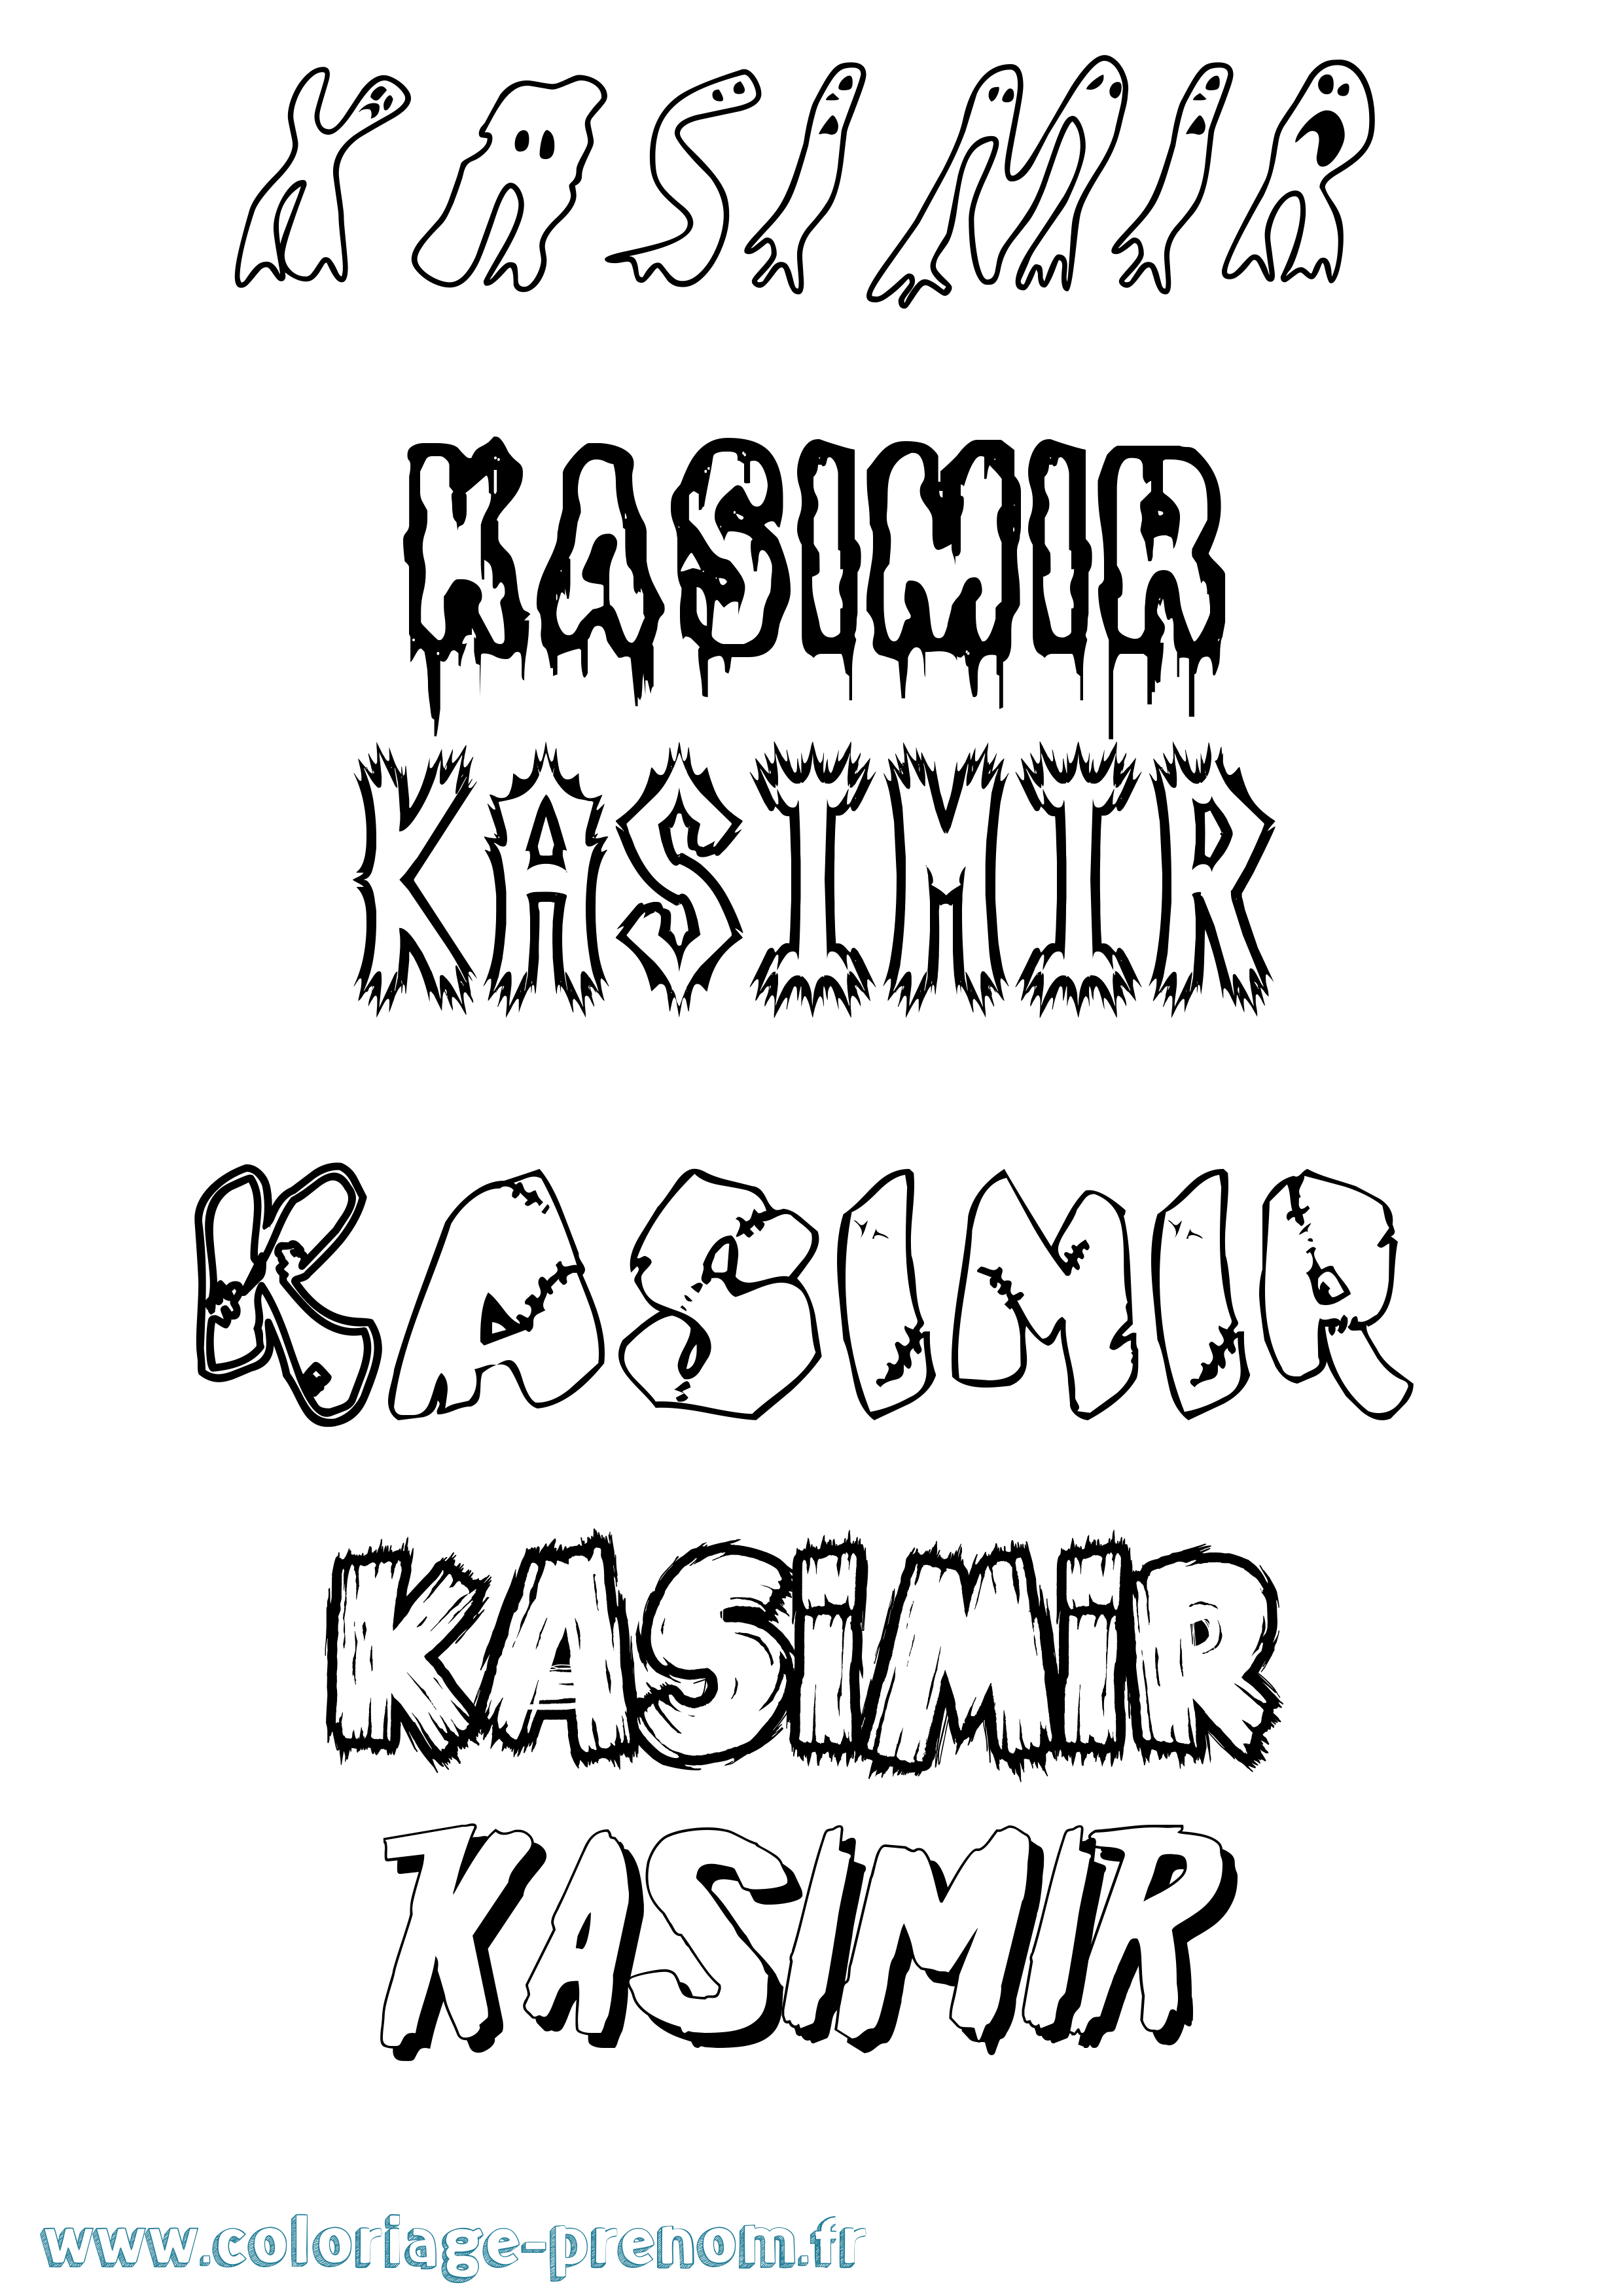 Coloriage prénom Kasimir Frisson